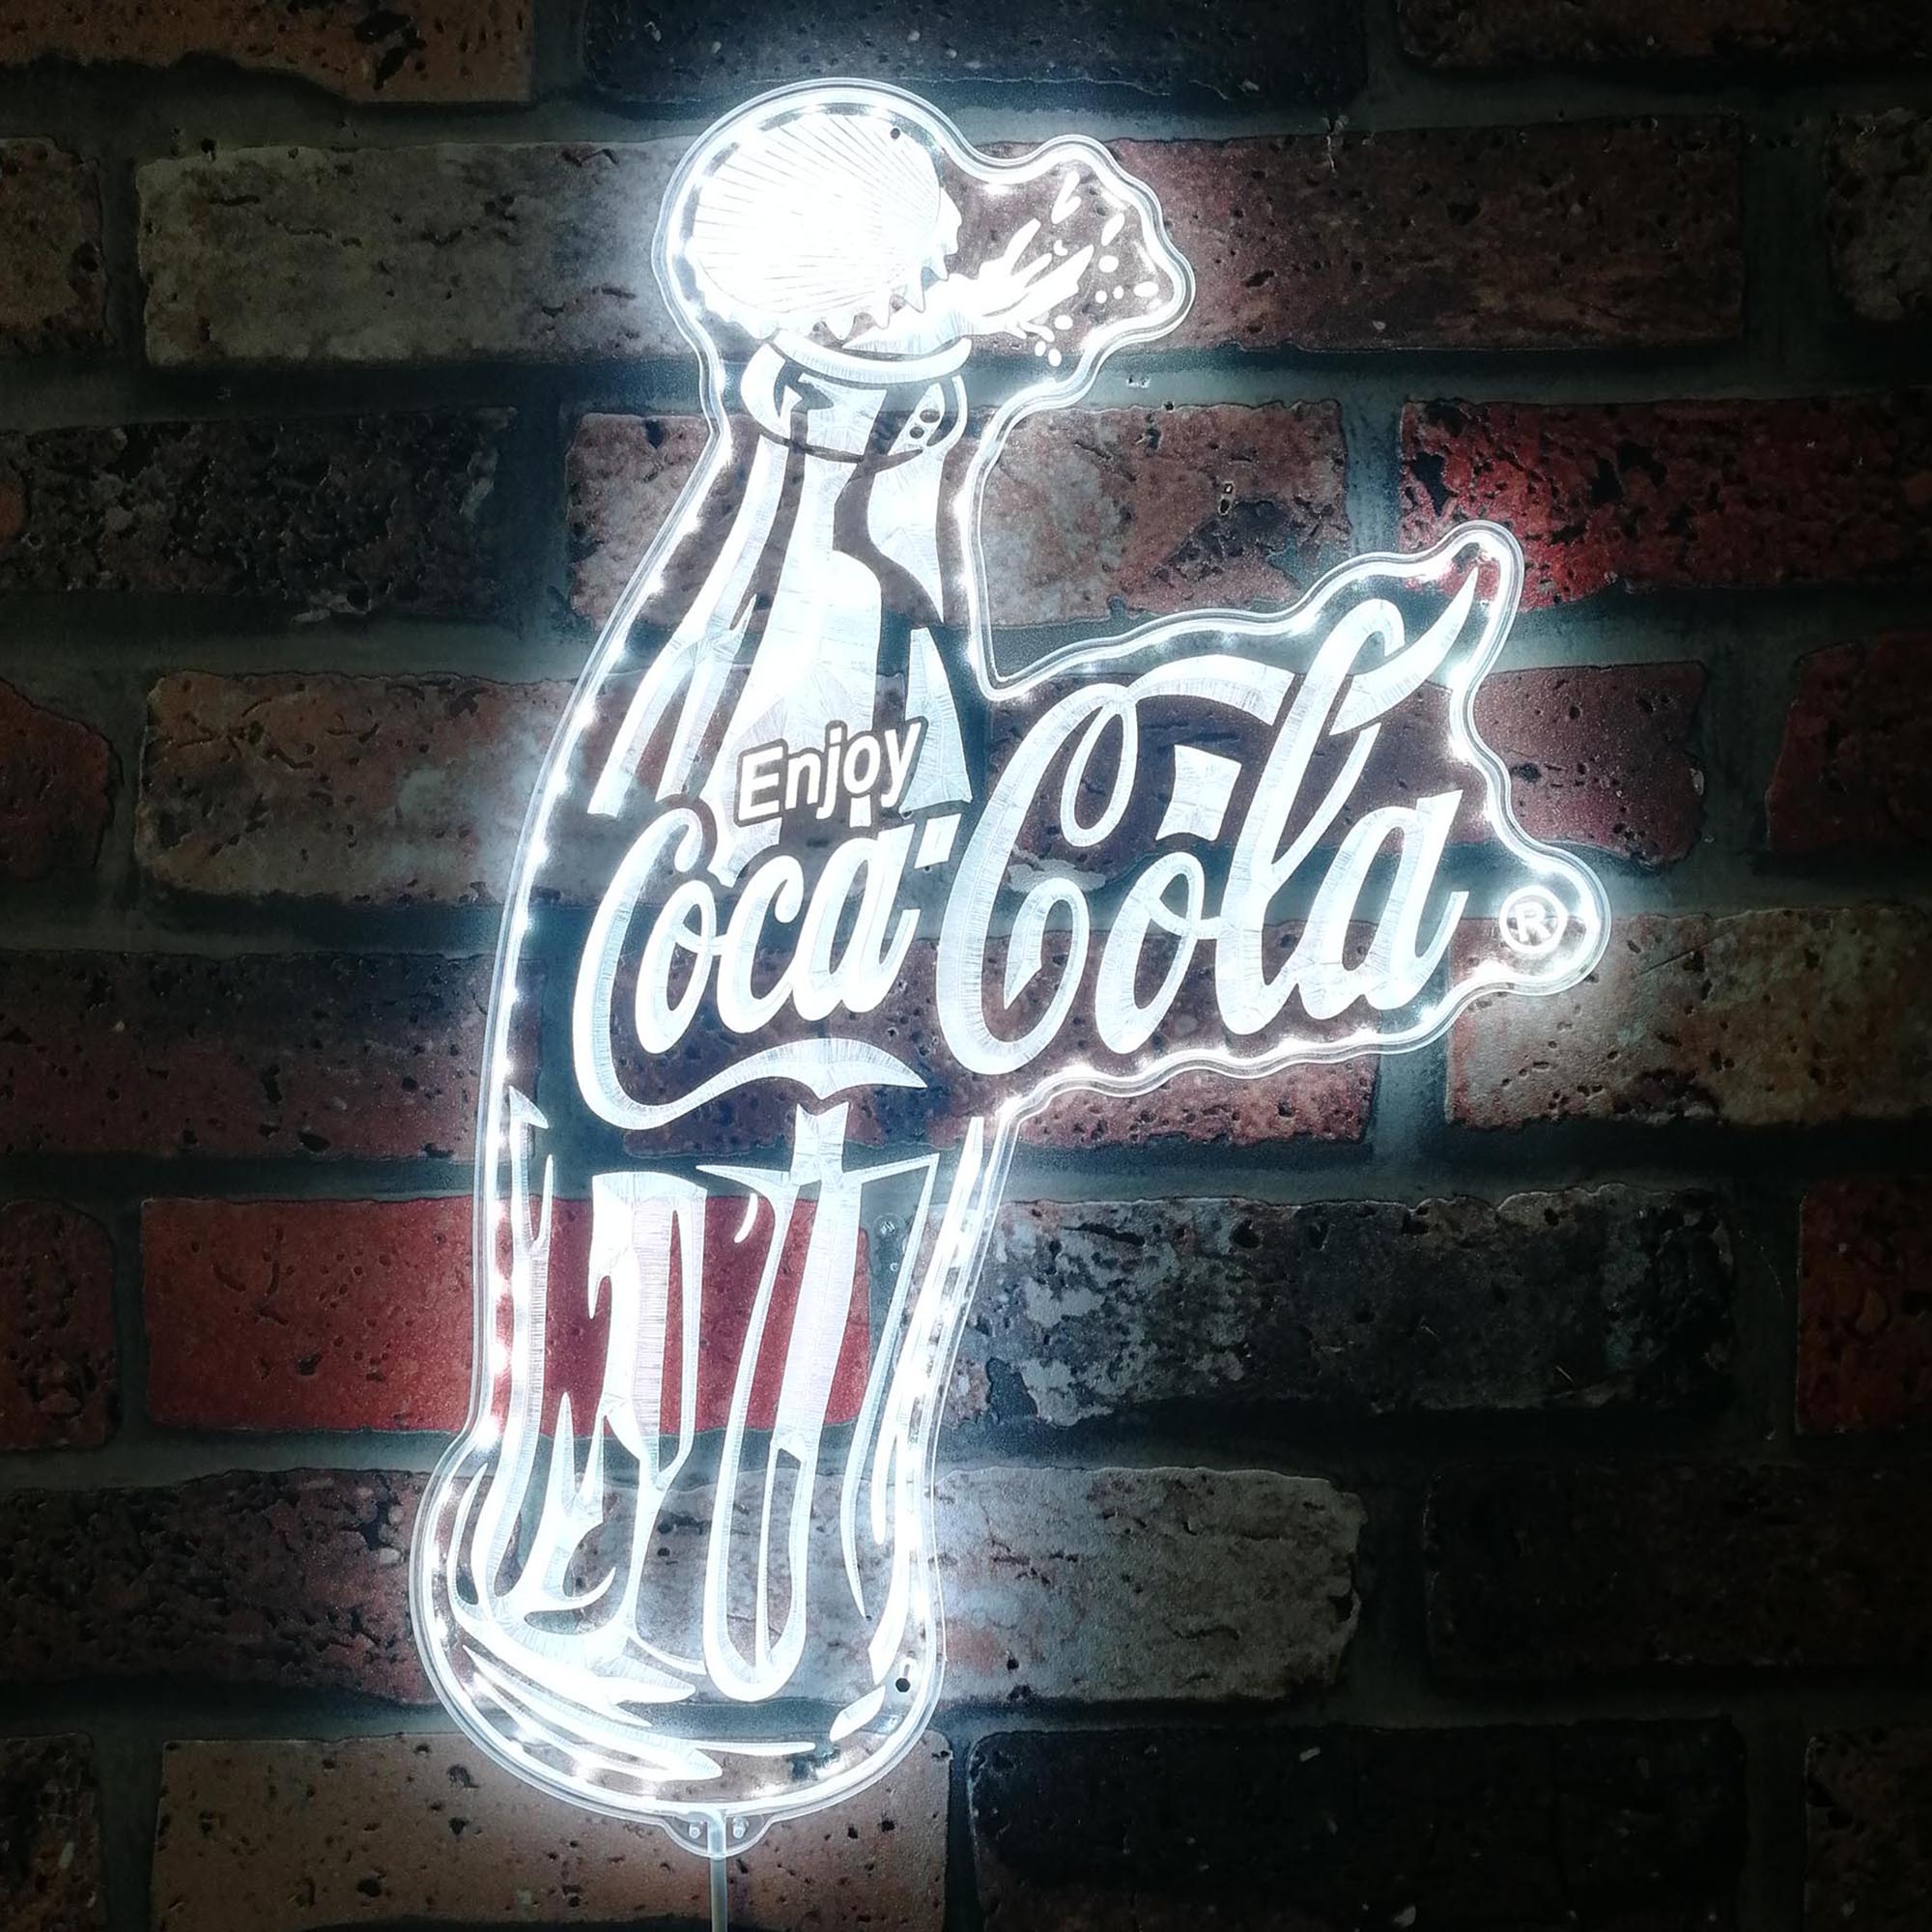 Coca Cola Bottle Dynamic RGB Edge Lit LED Sign